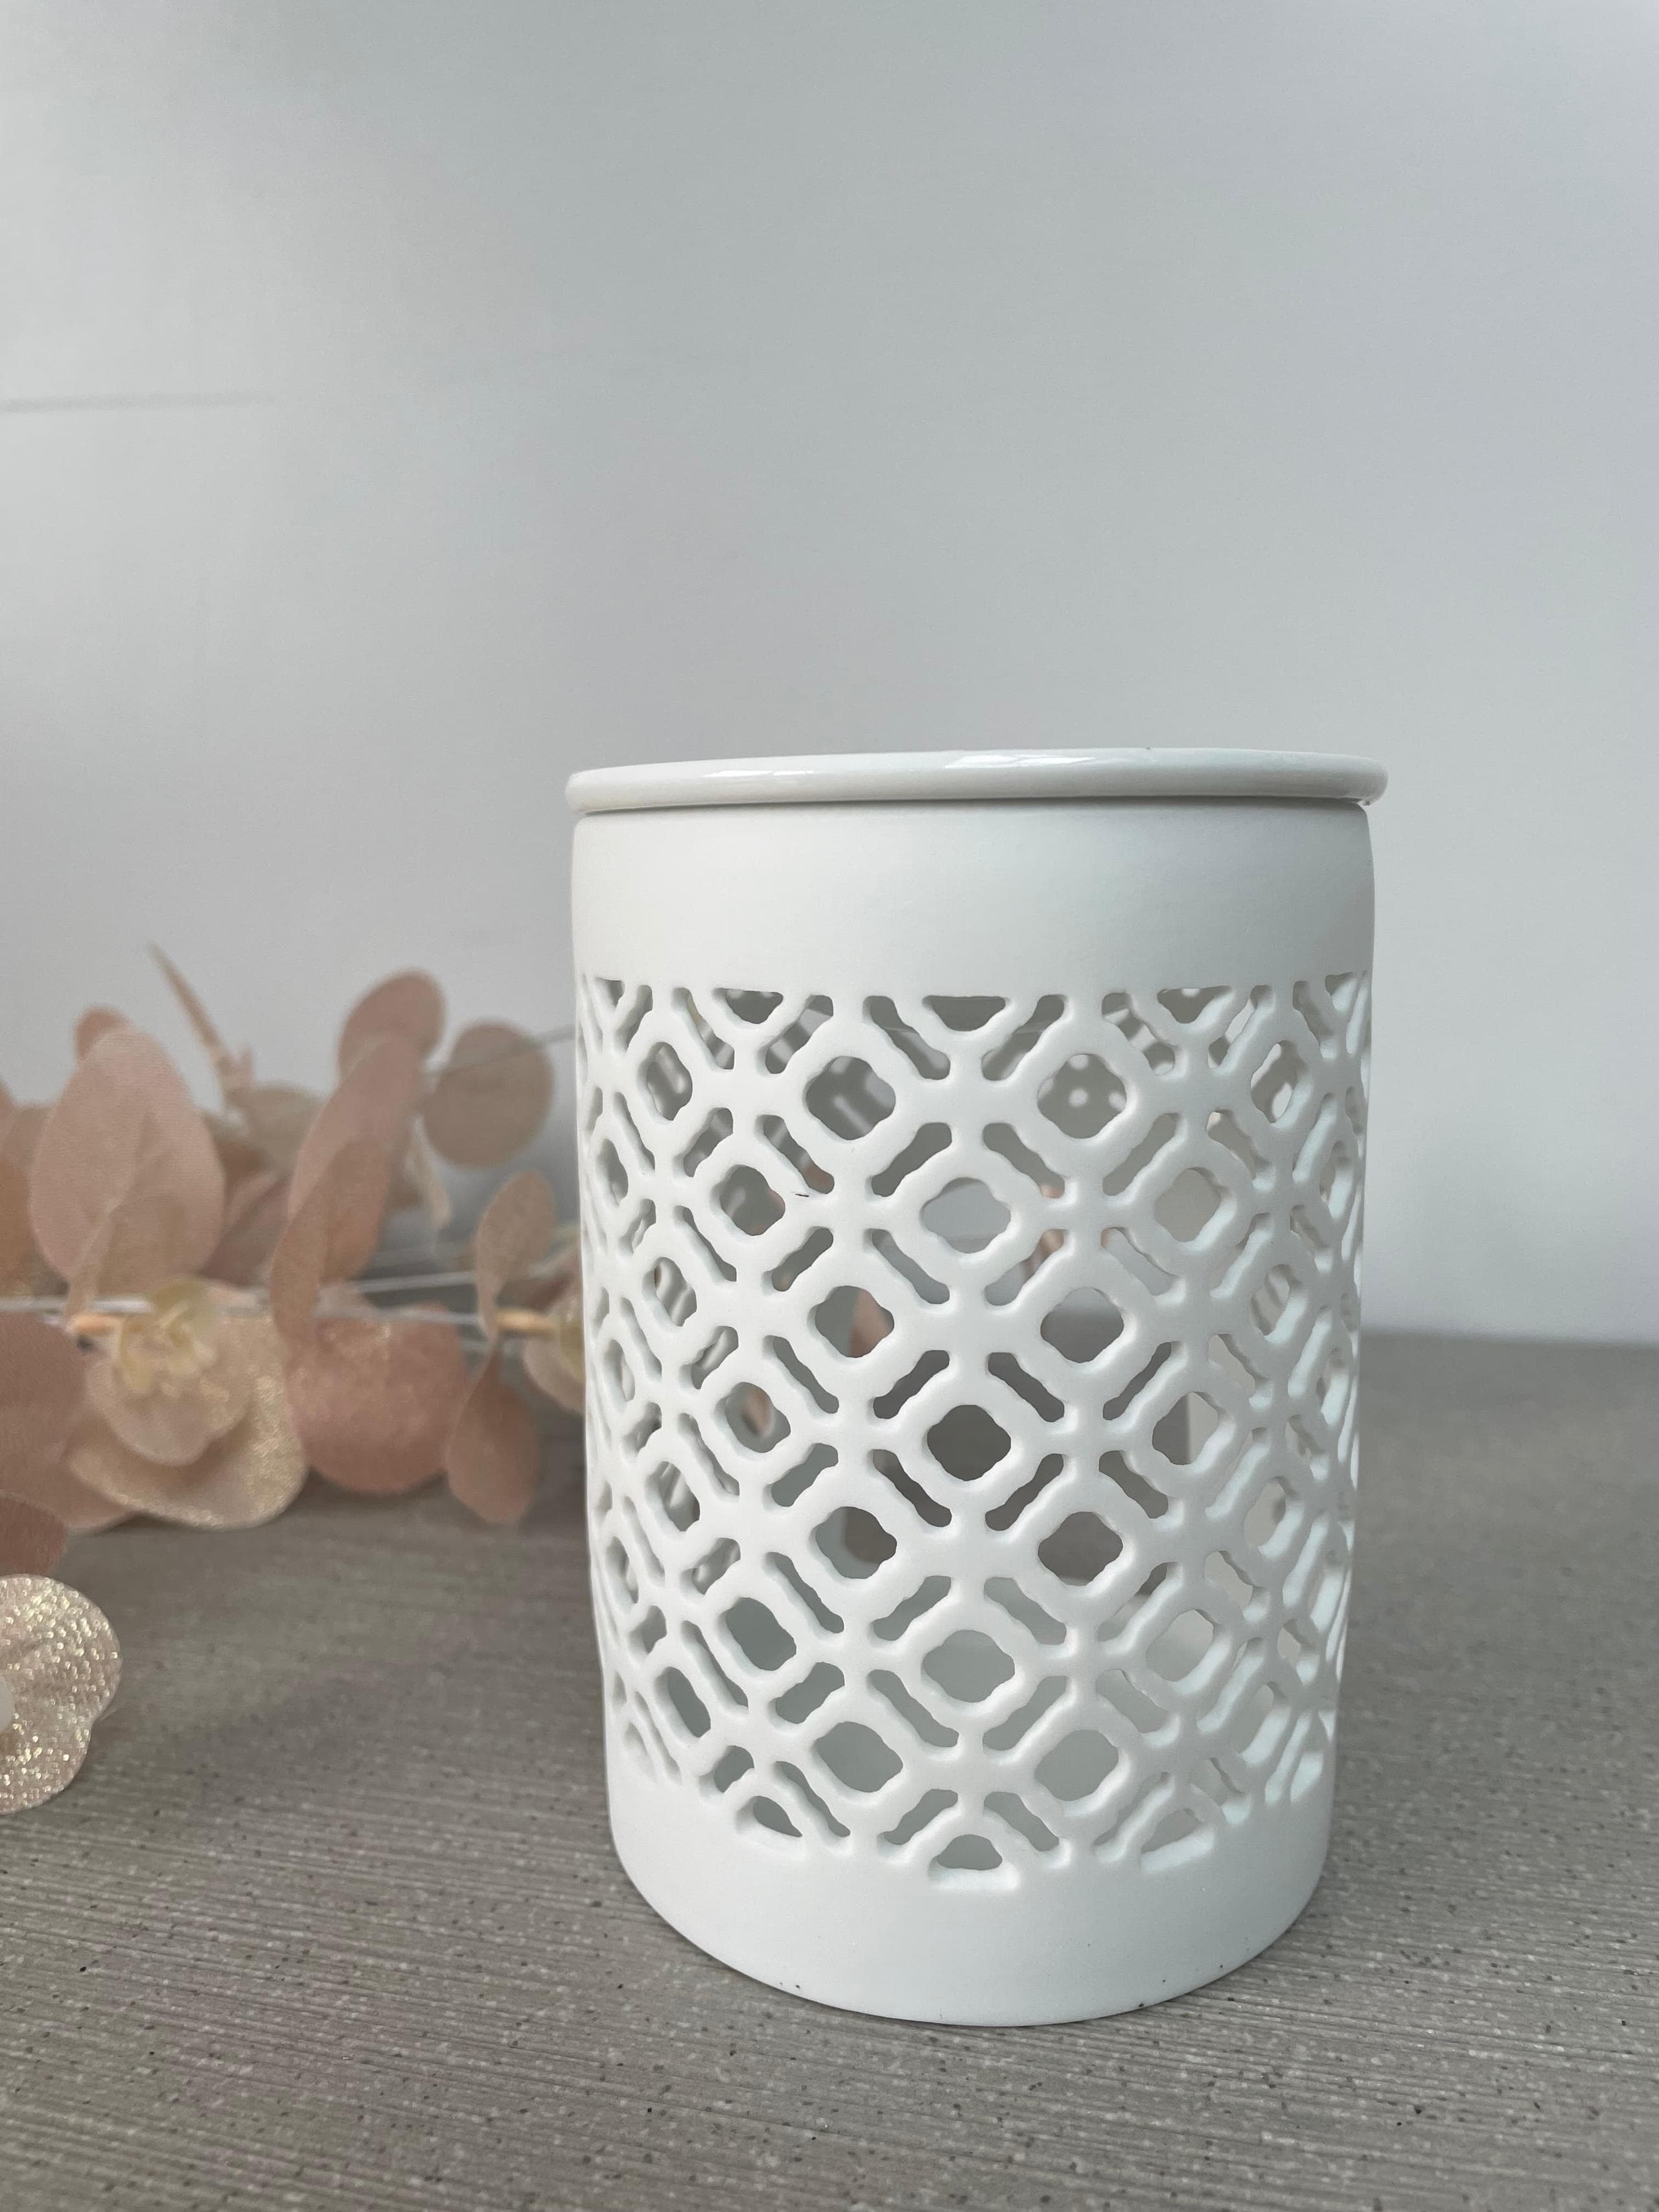 Lattice Design Tealight burner in matte white finish.